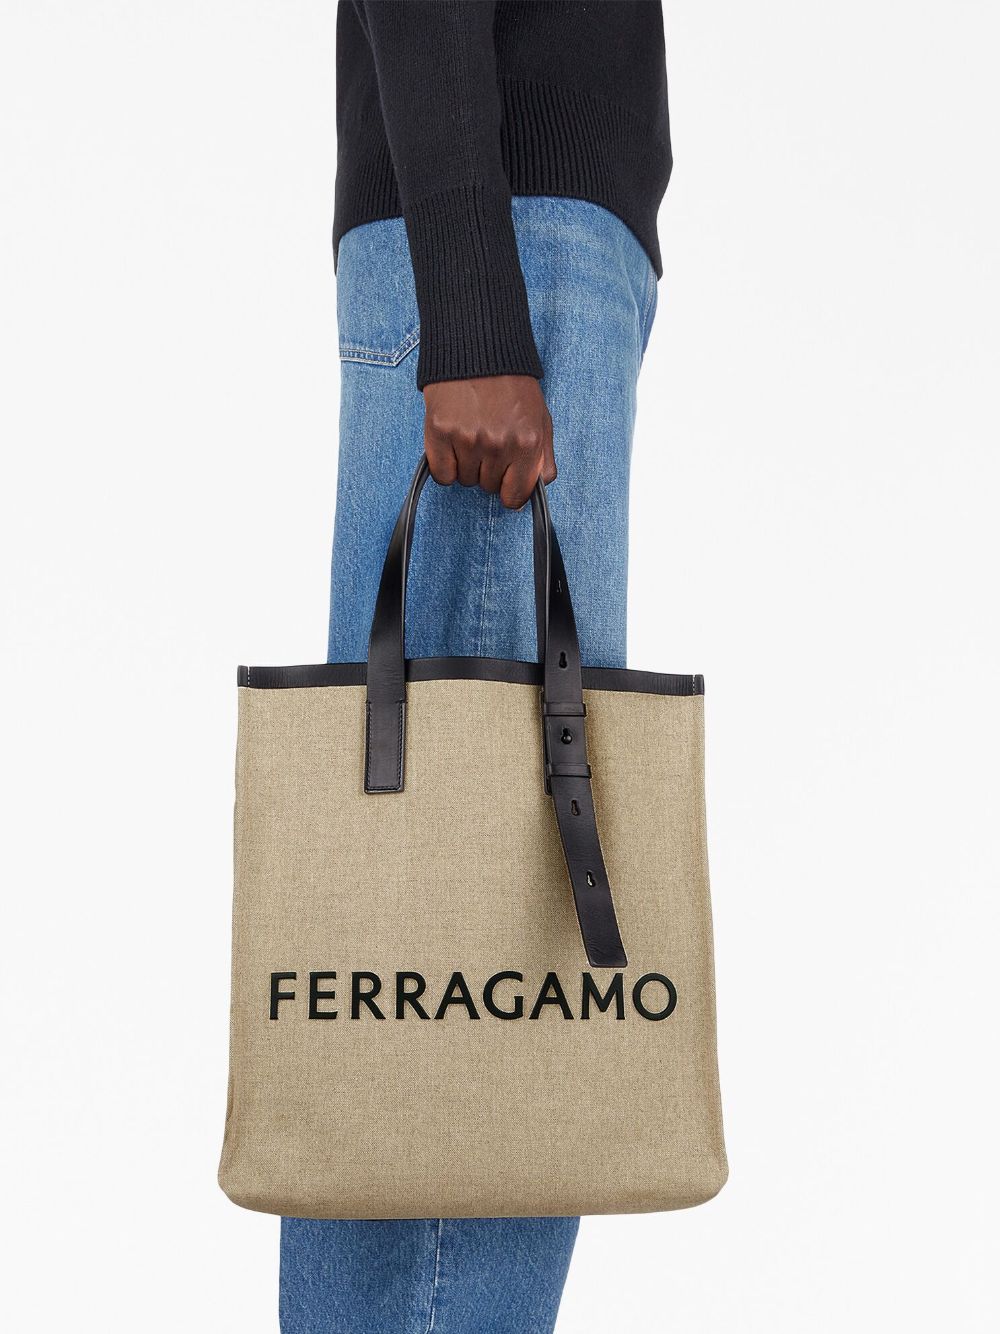 FERRAGAMO Logo Tote Handbag for Men - Sand Beige and Black